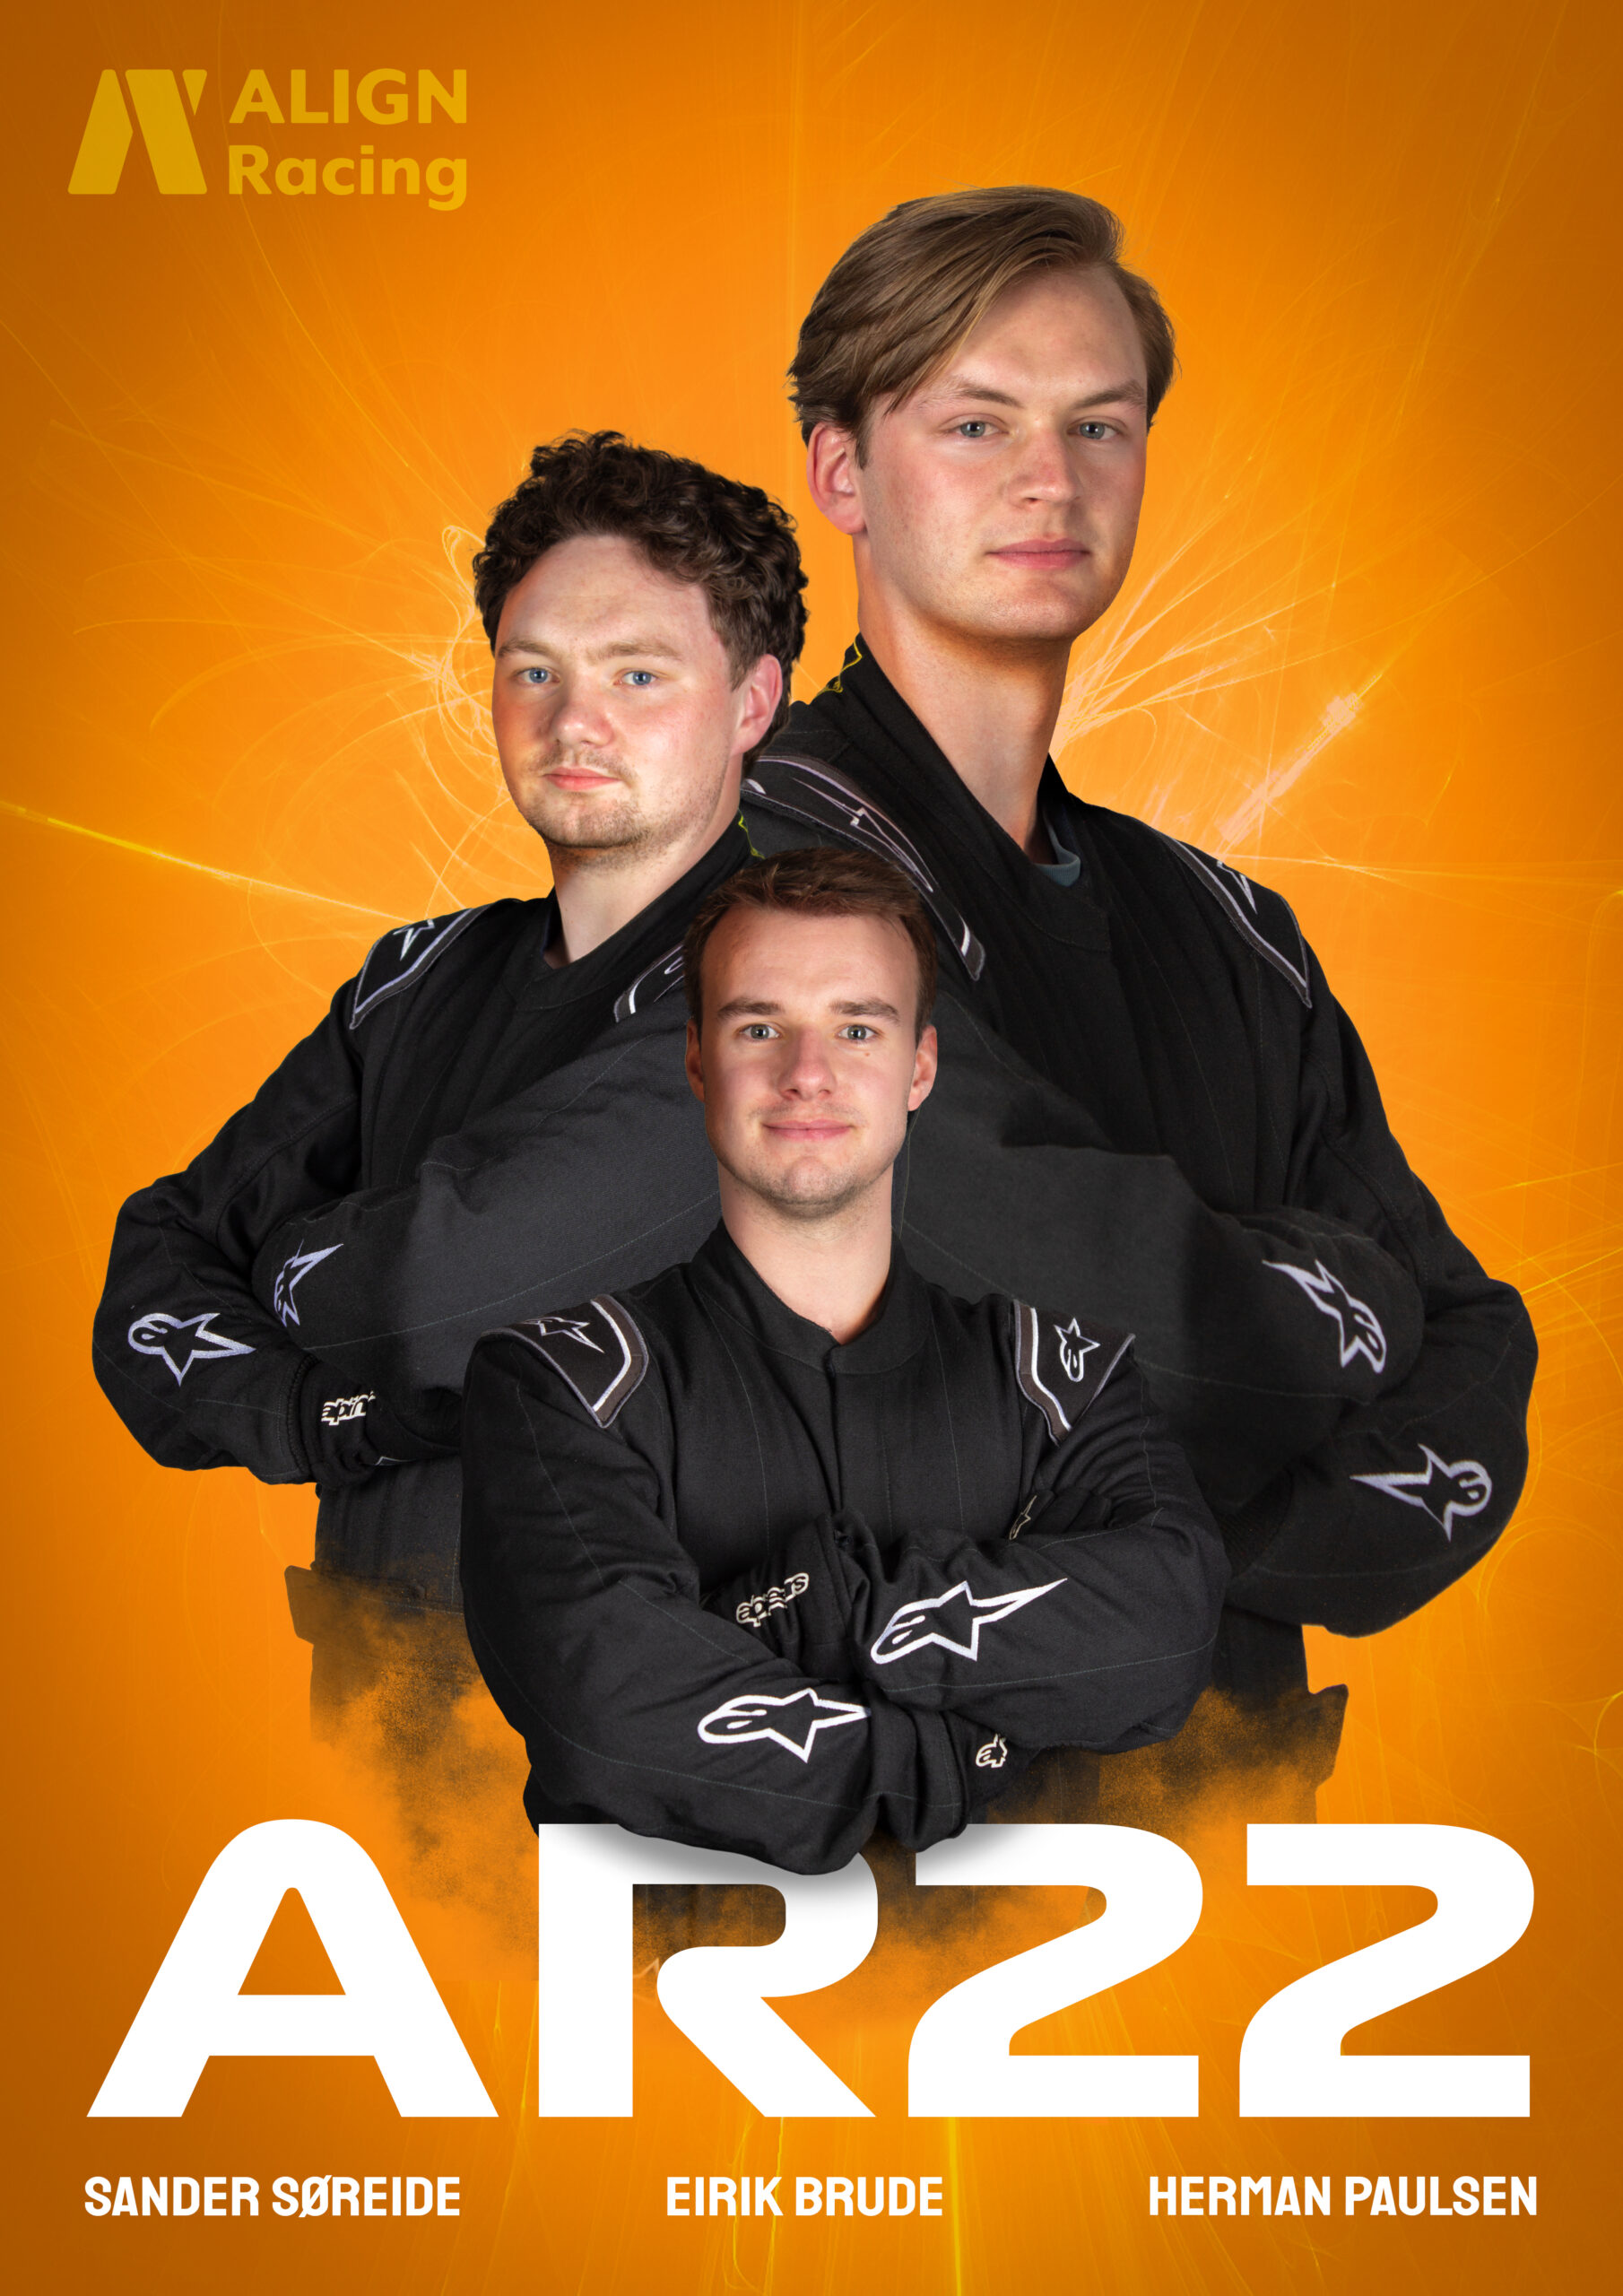 AR22 Drivers